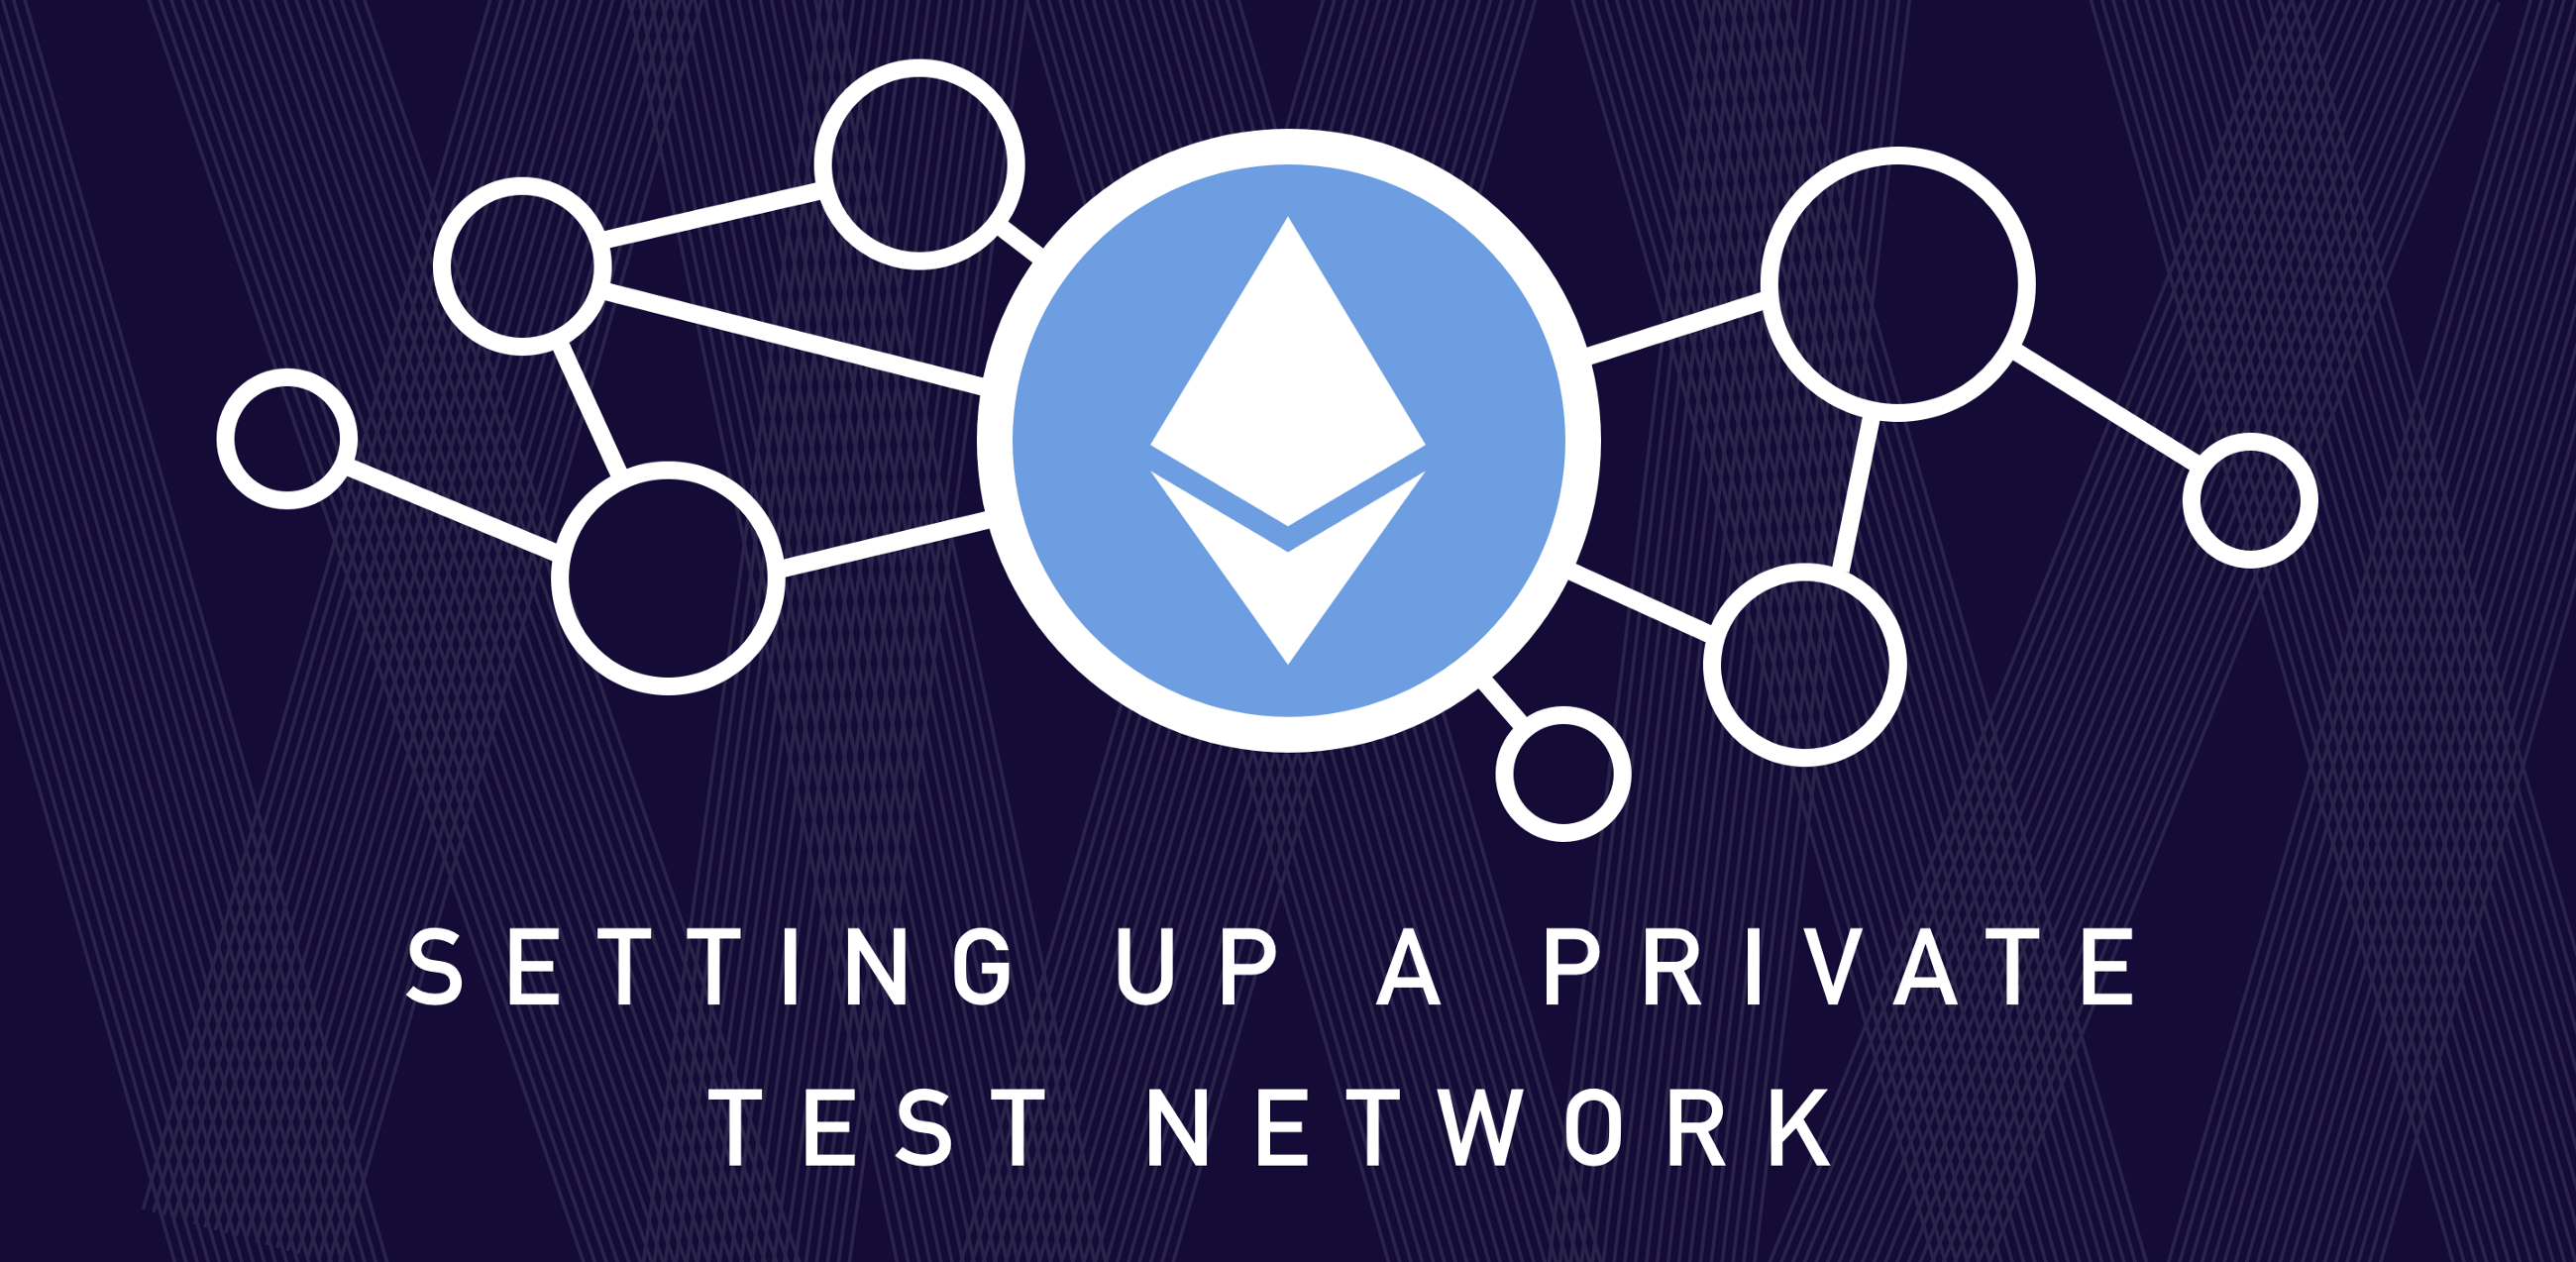 Etherium Blockchain Logo - How To: Create Your Own Private Ethereum Blockchain